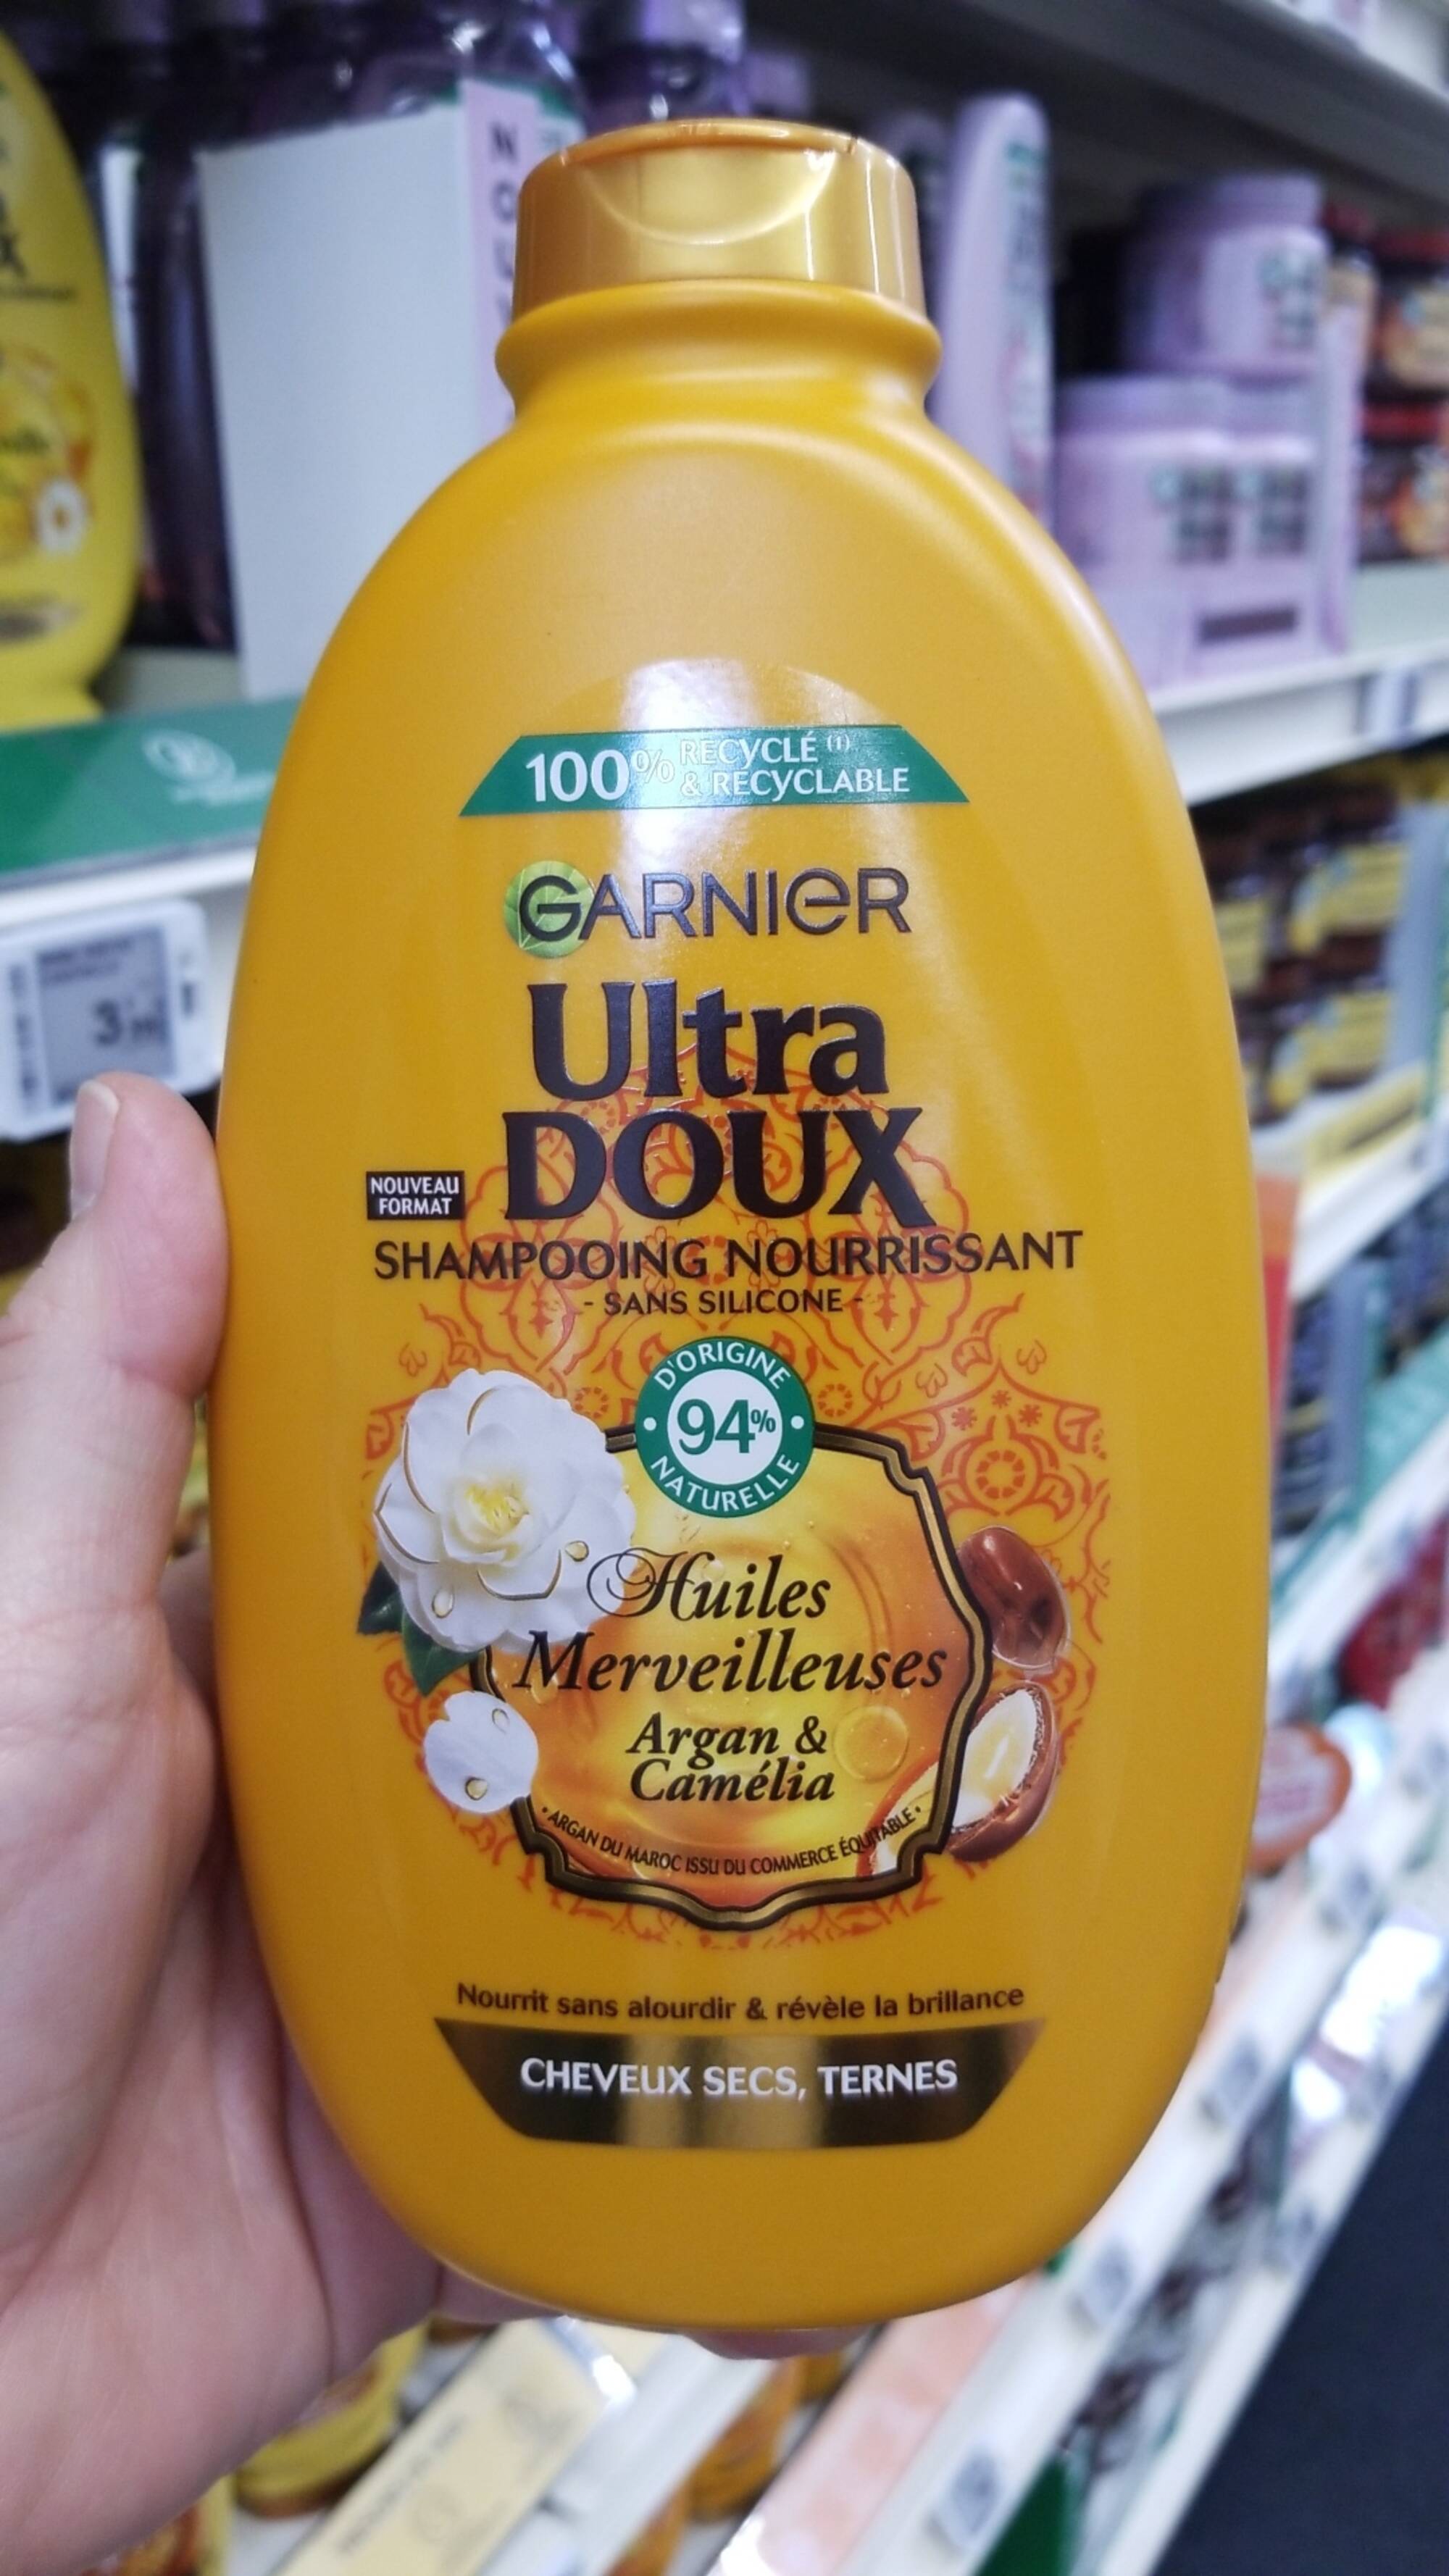 GARNIER - Ultra doux - Shampooing nourrissant sans silicone